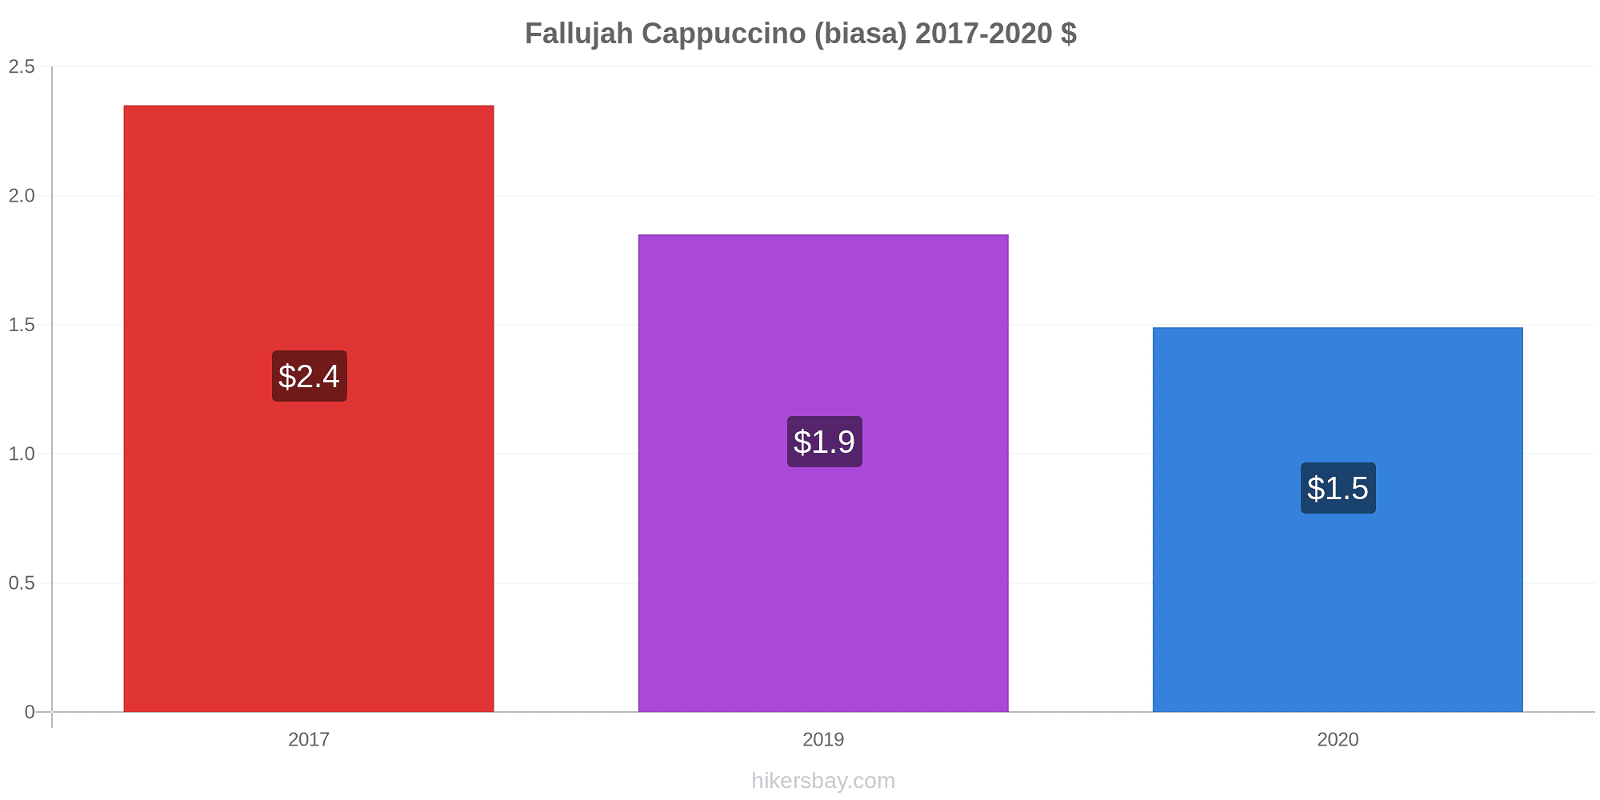 Fallujah perubahan harga Cappuccino (biasa) hikersbay.com